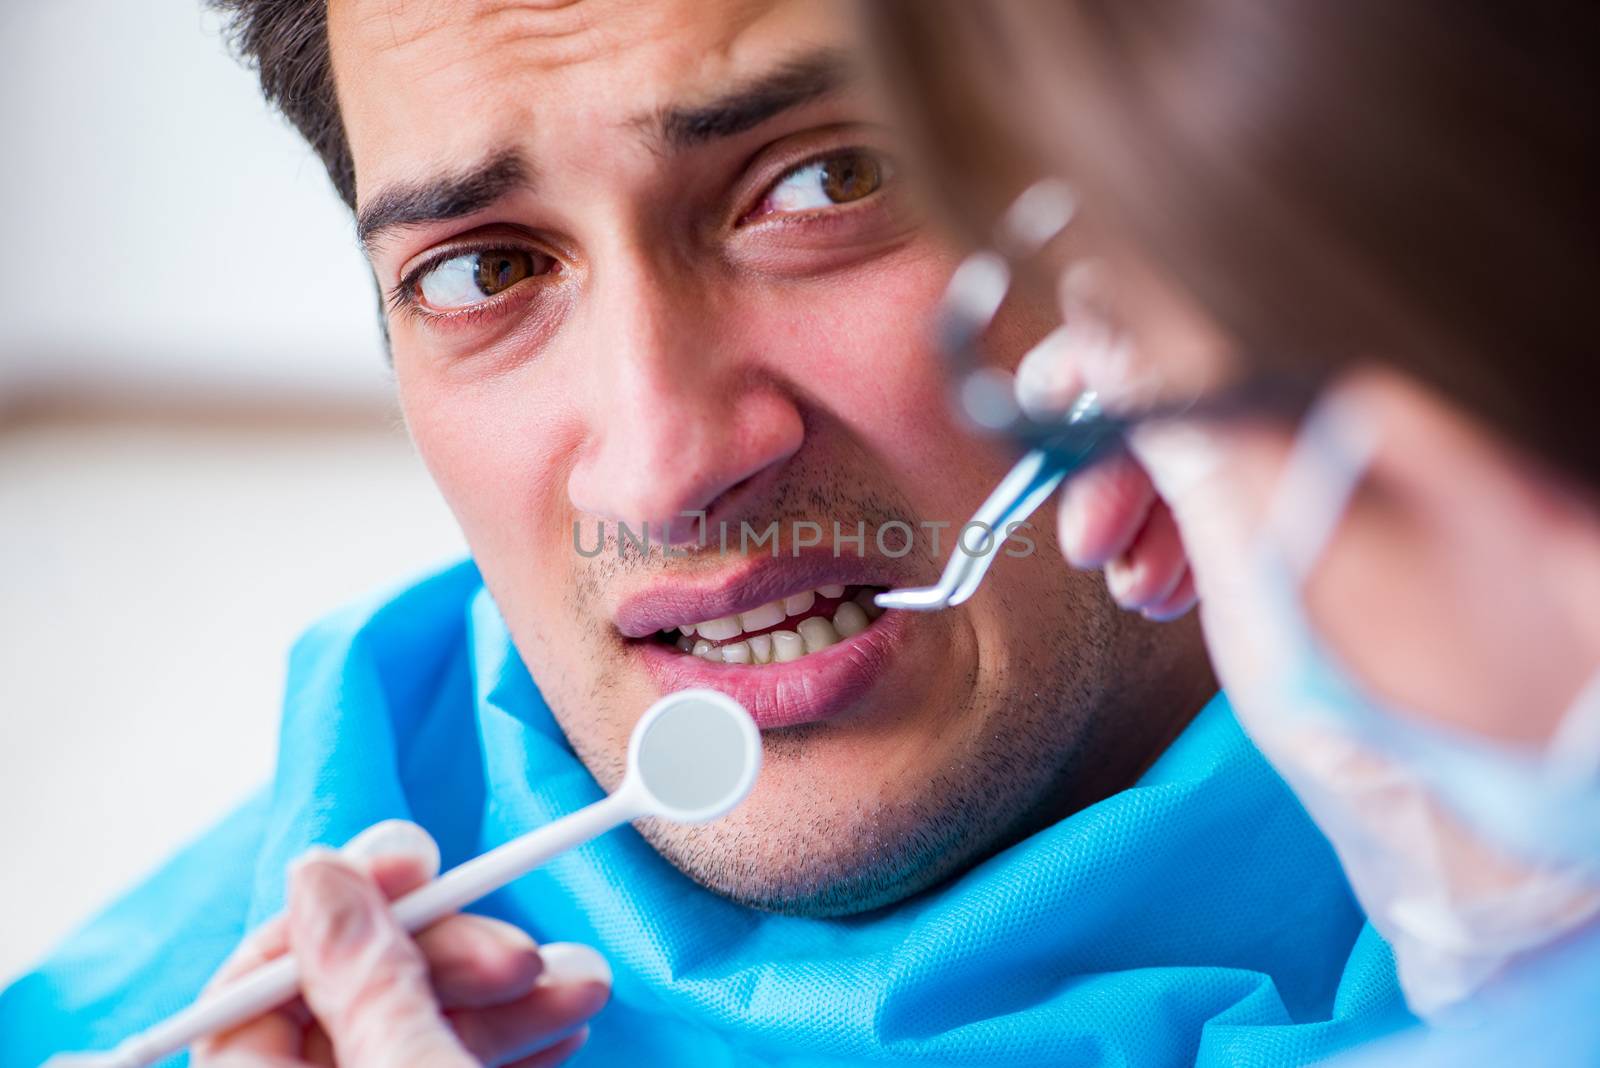 Patient afraid of dentist during doctor visit by Elnur